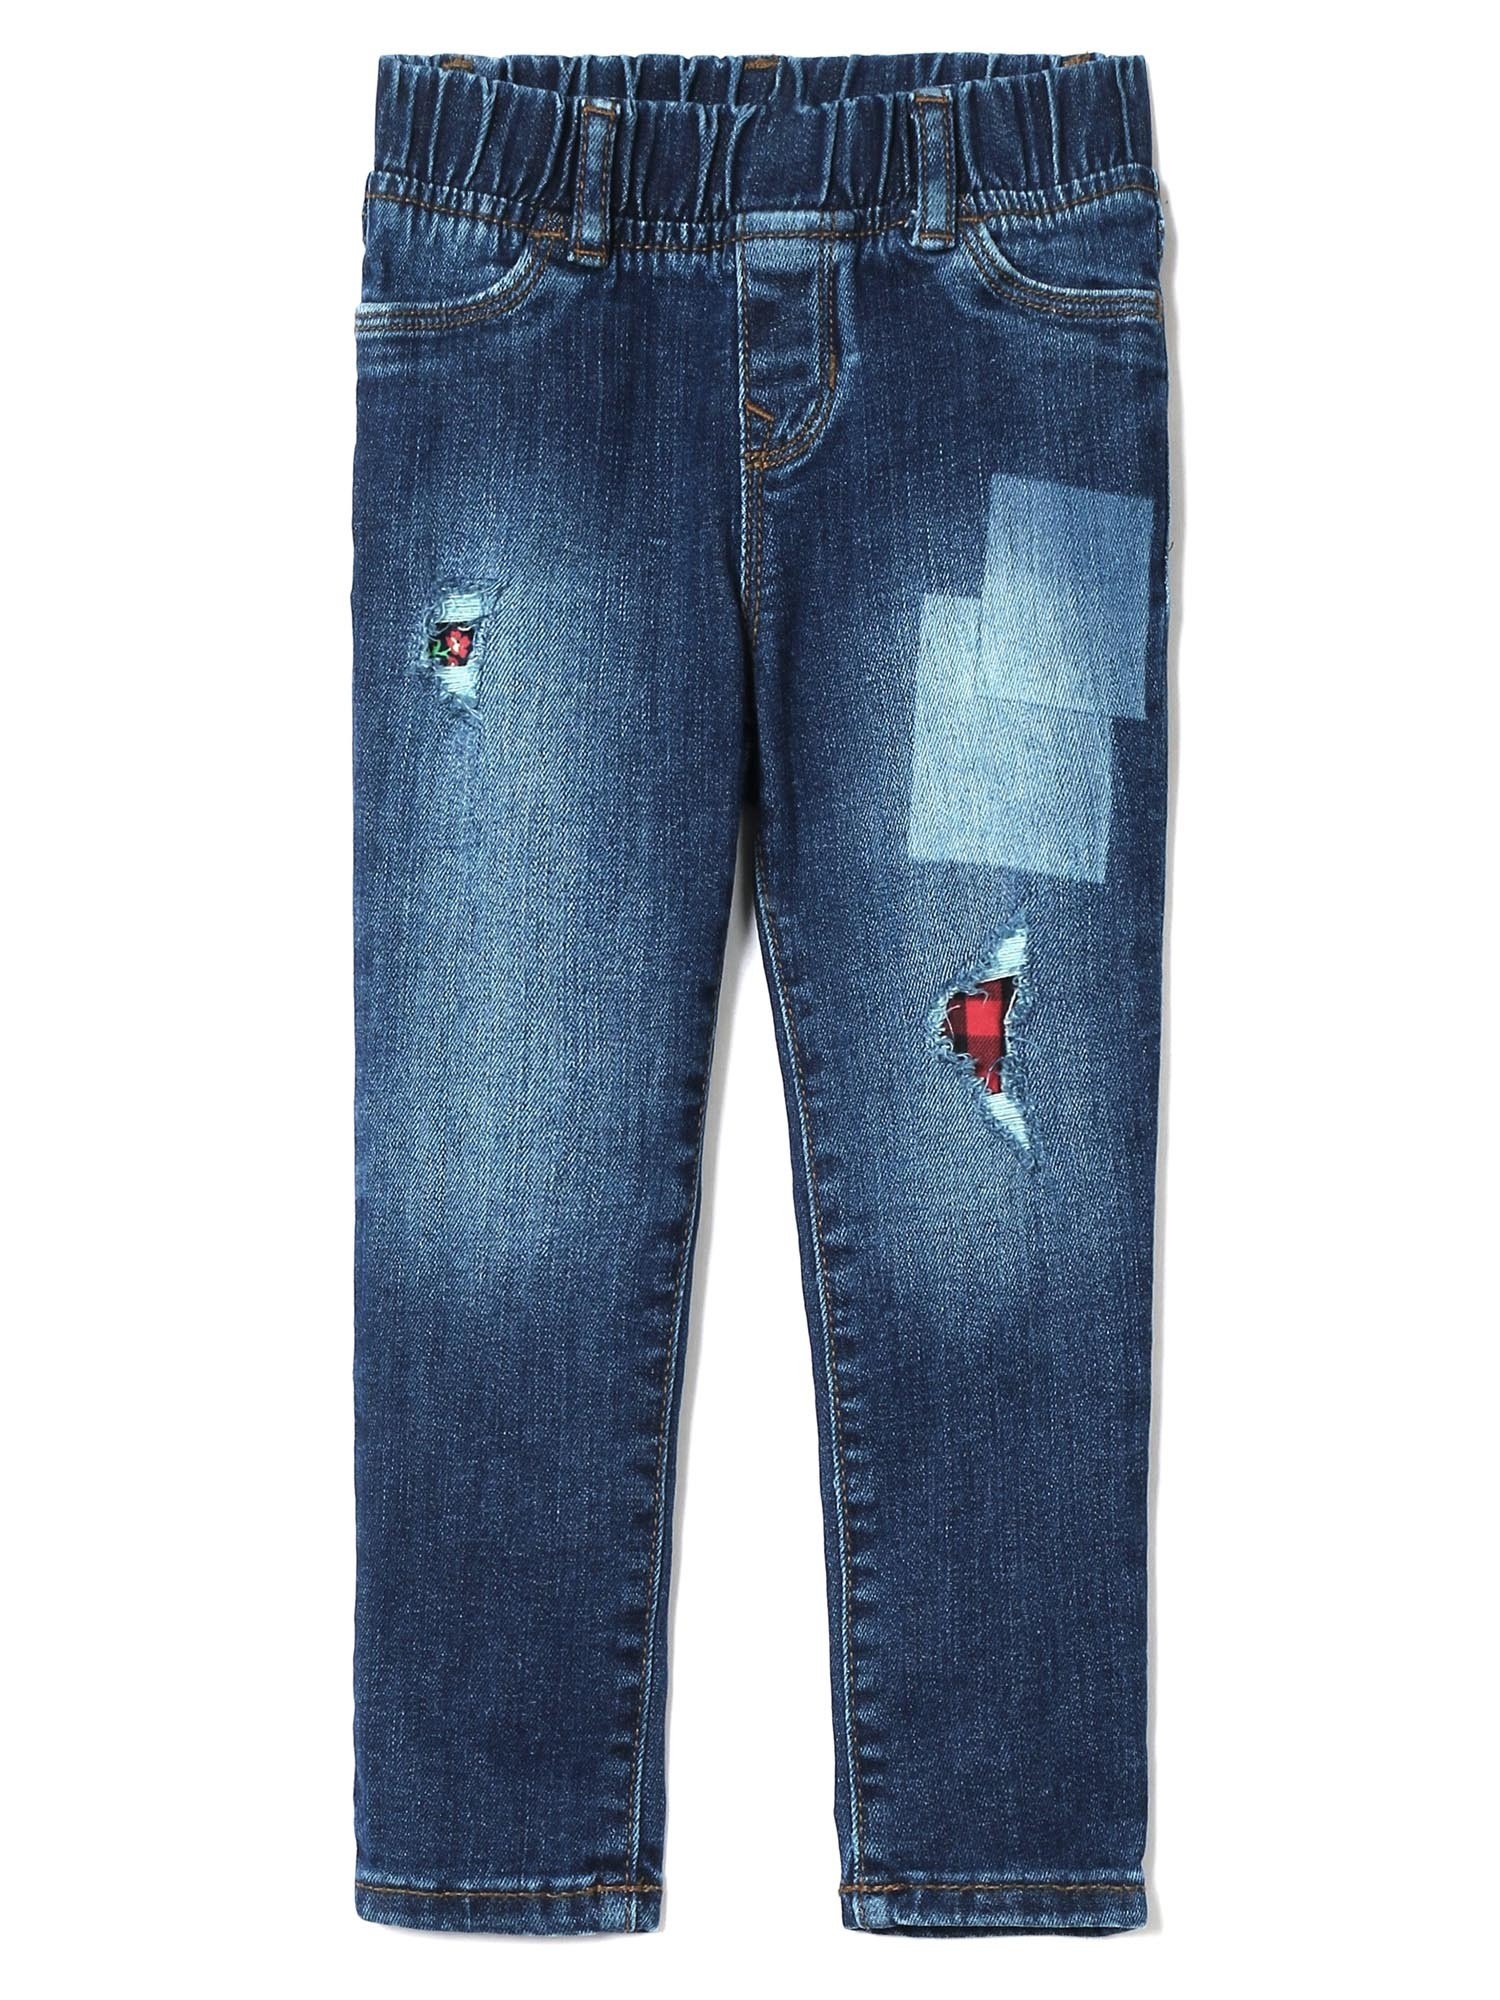 Yamalı jean pantolon product image